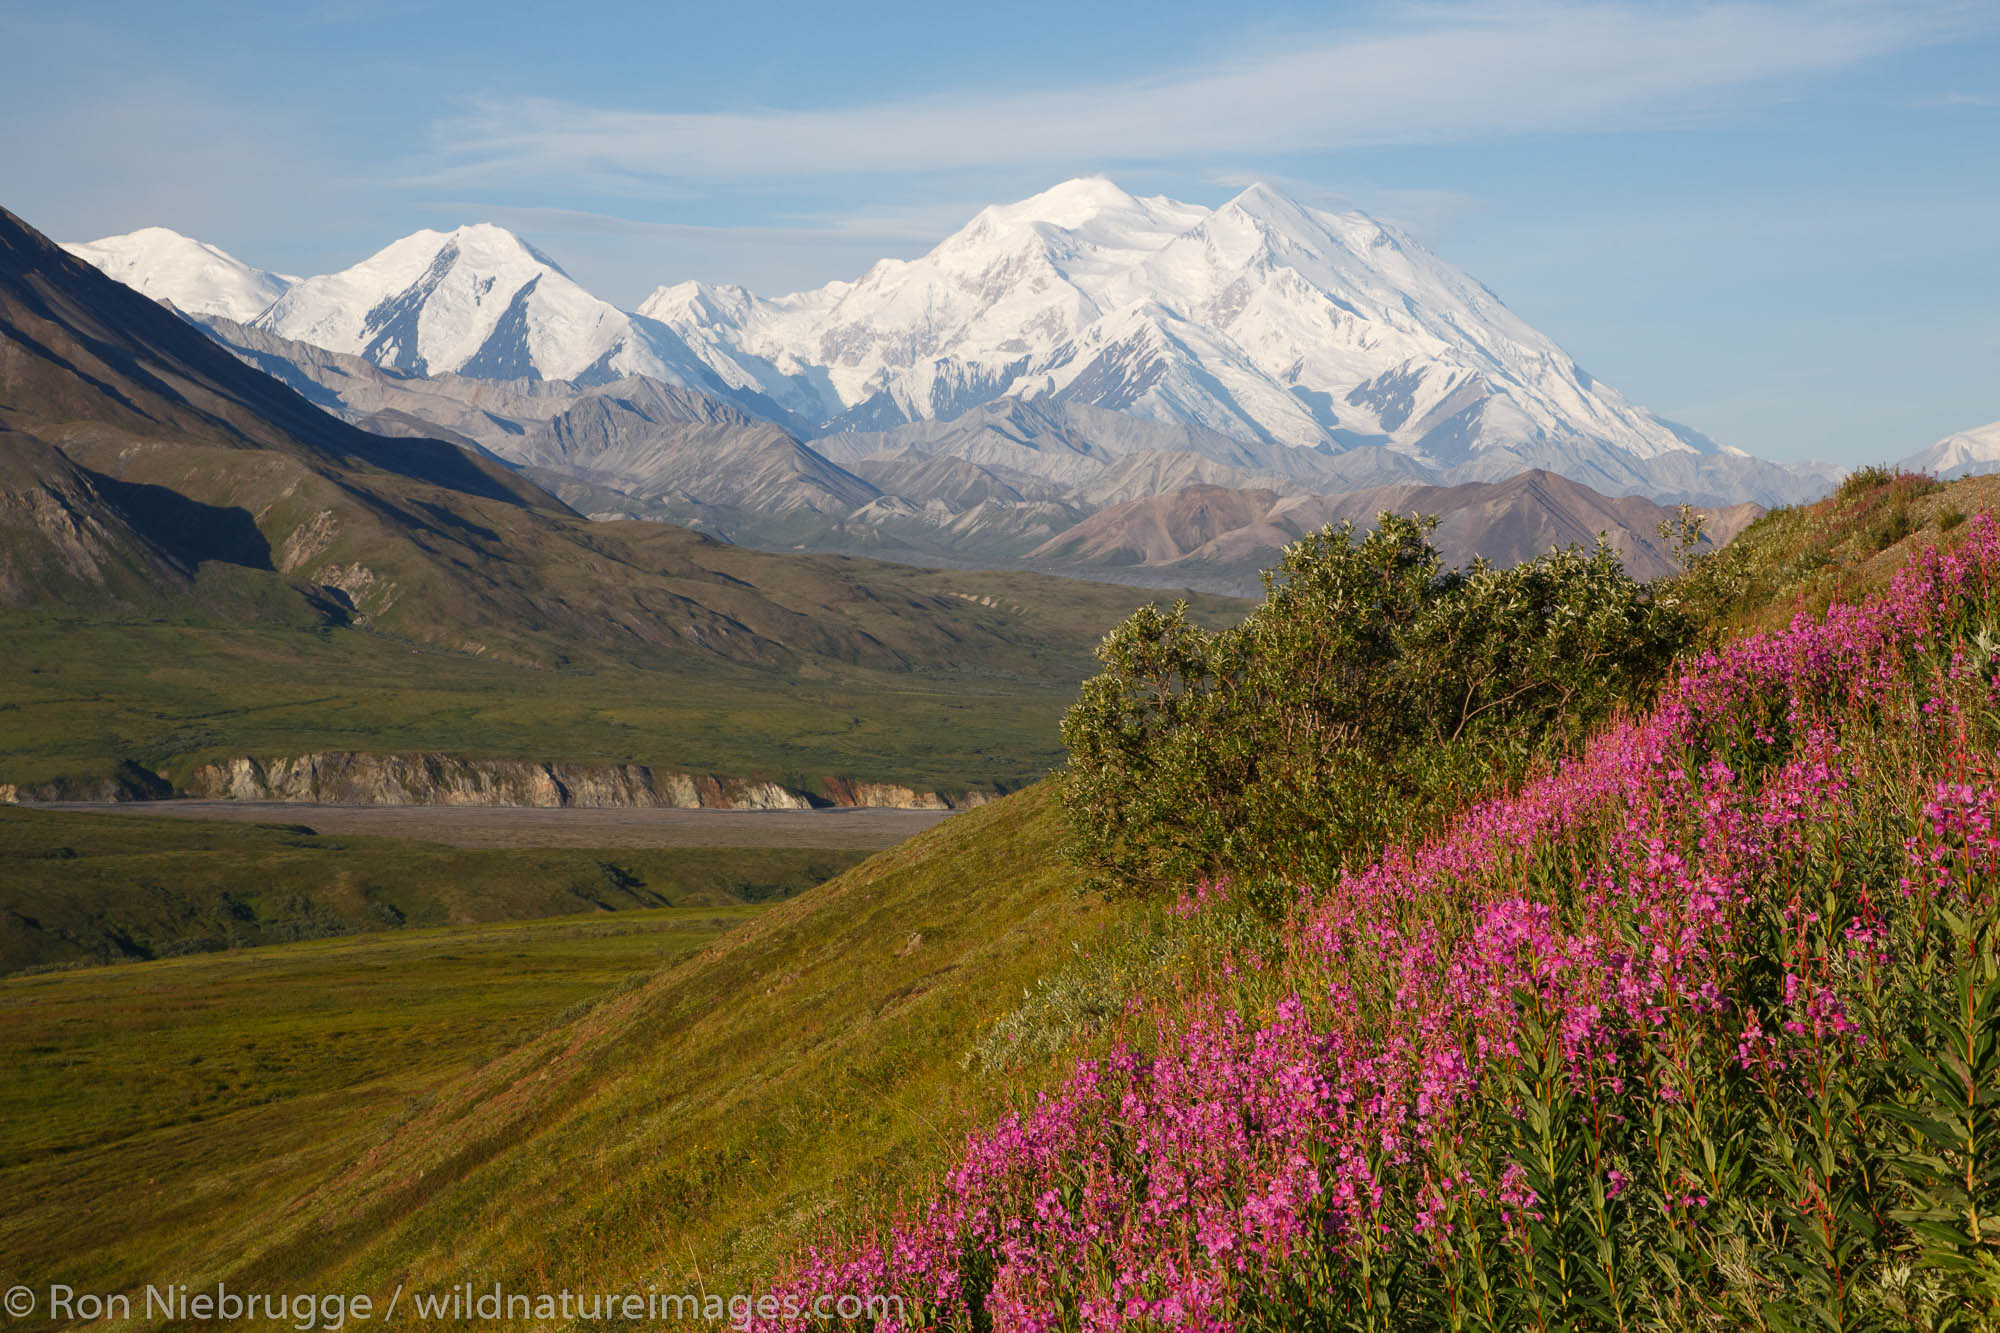 Mt McKinley also known as Denali, Denali National Park, Alaska.